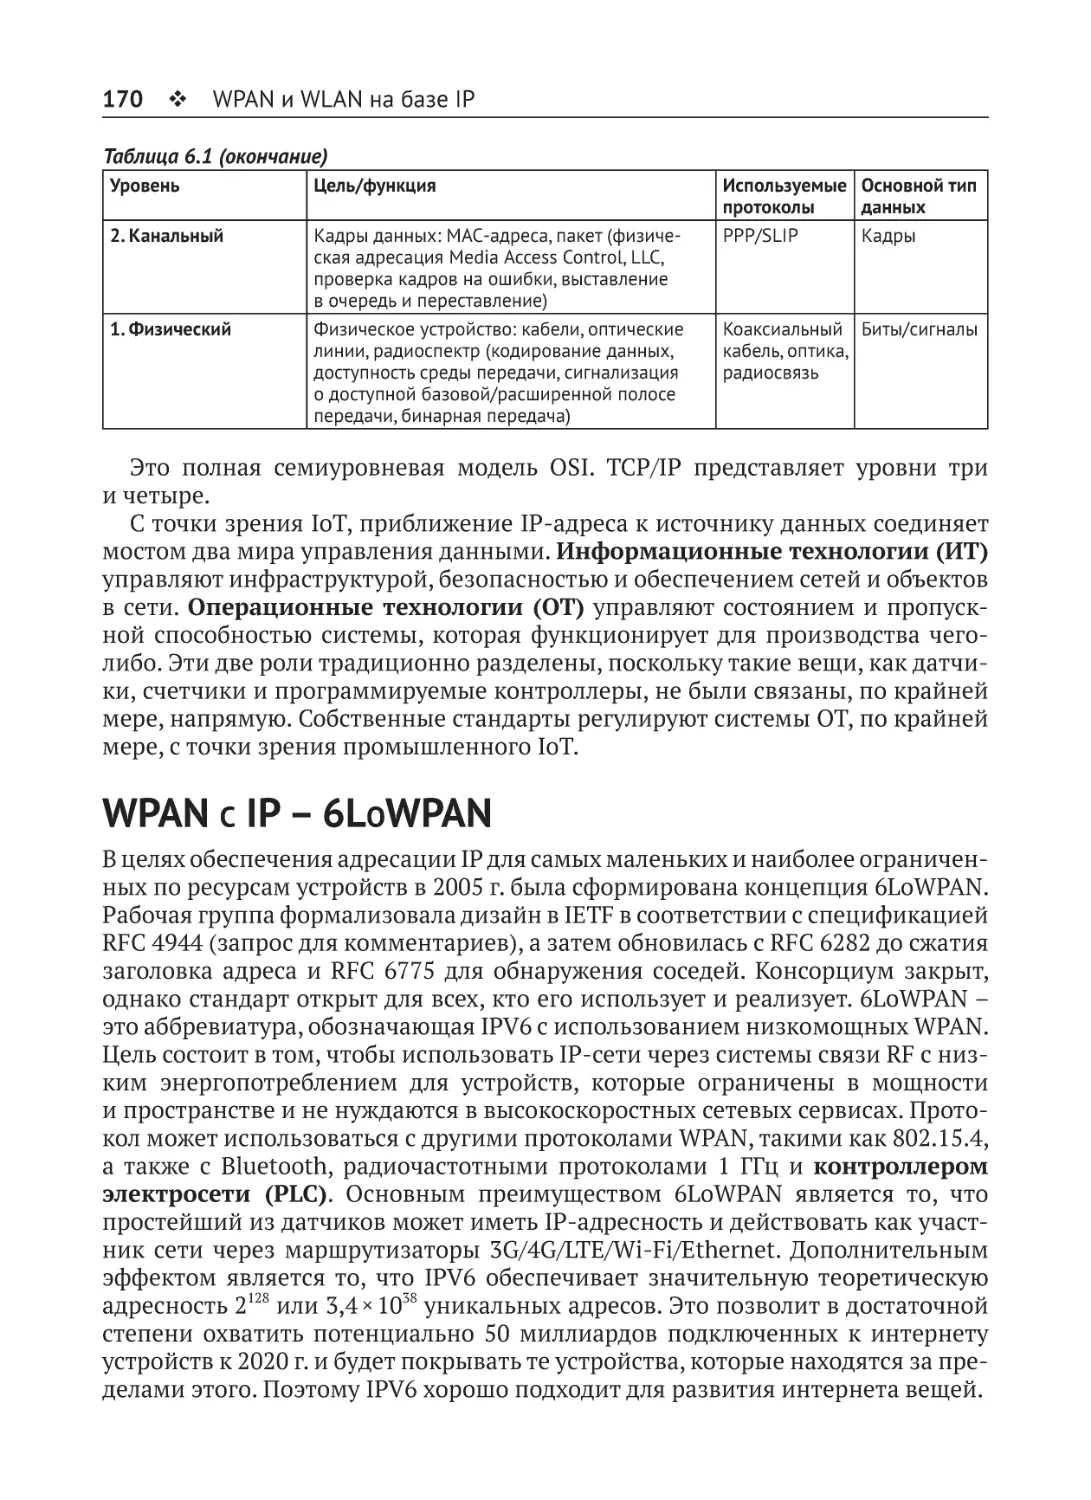 WPAN с IP – 6LoWPAN